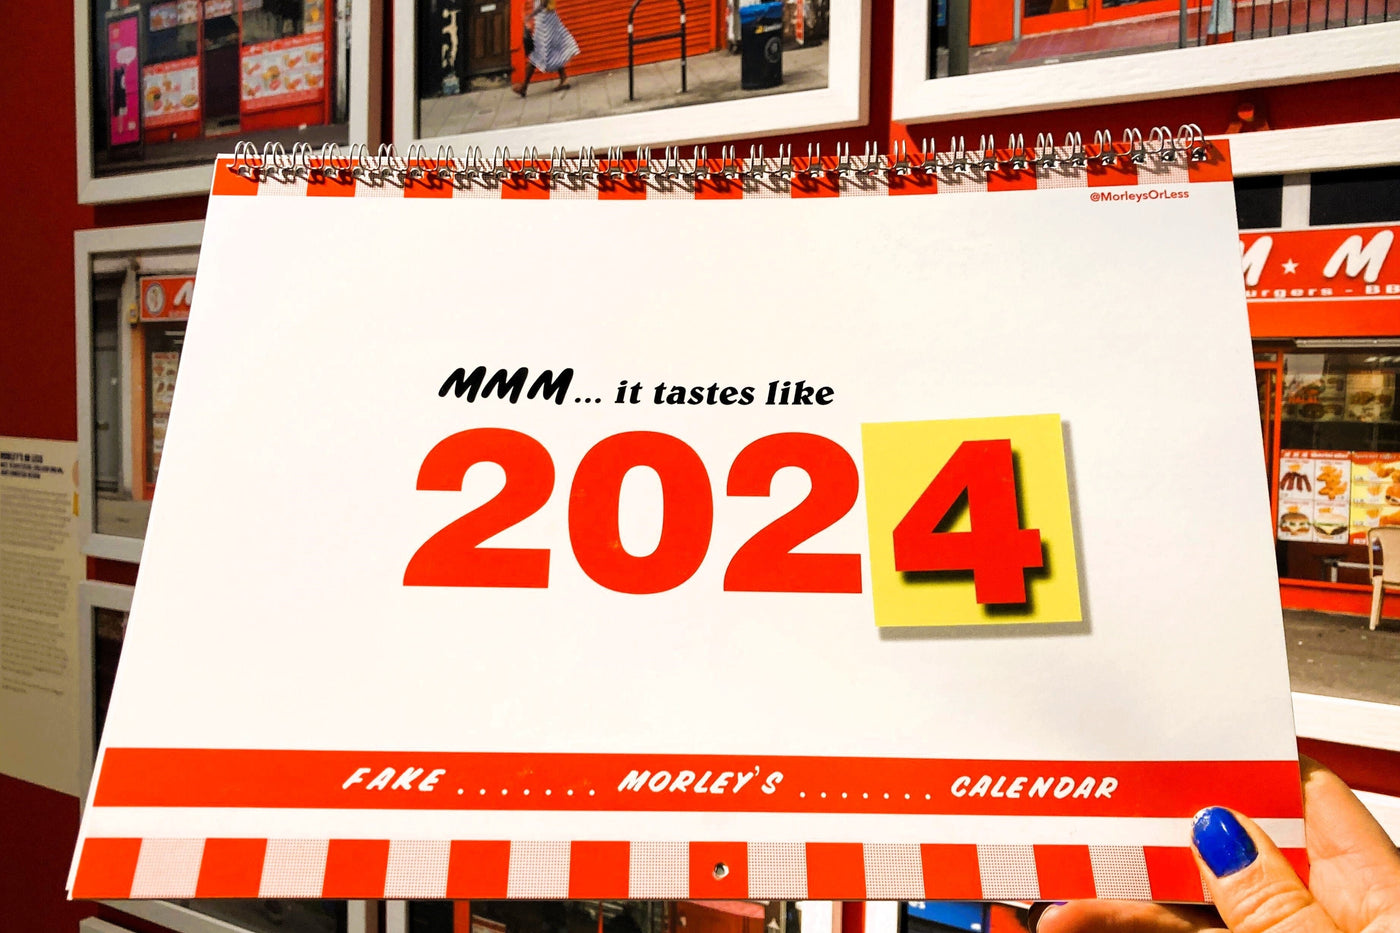 Morley's or Less Calendar 2024